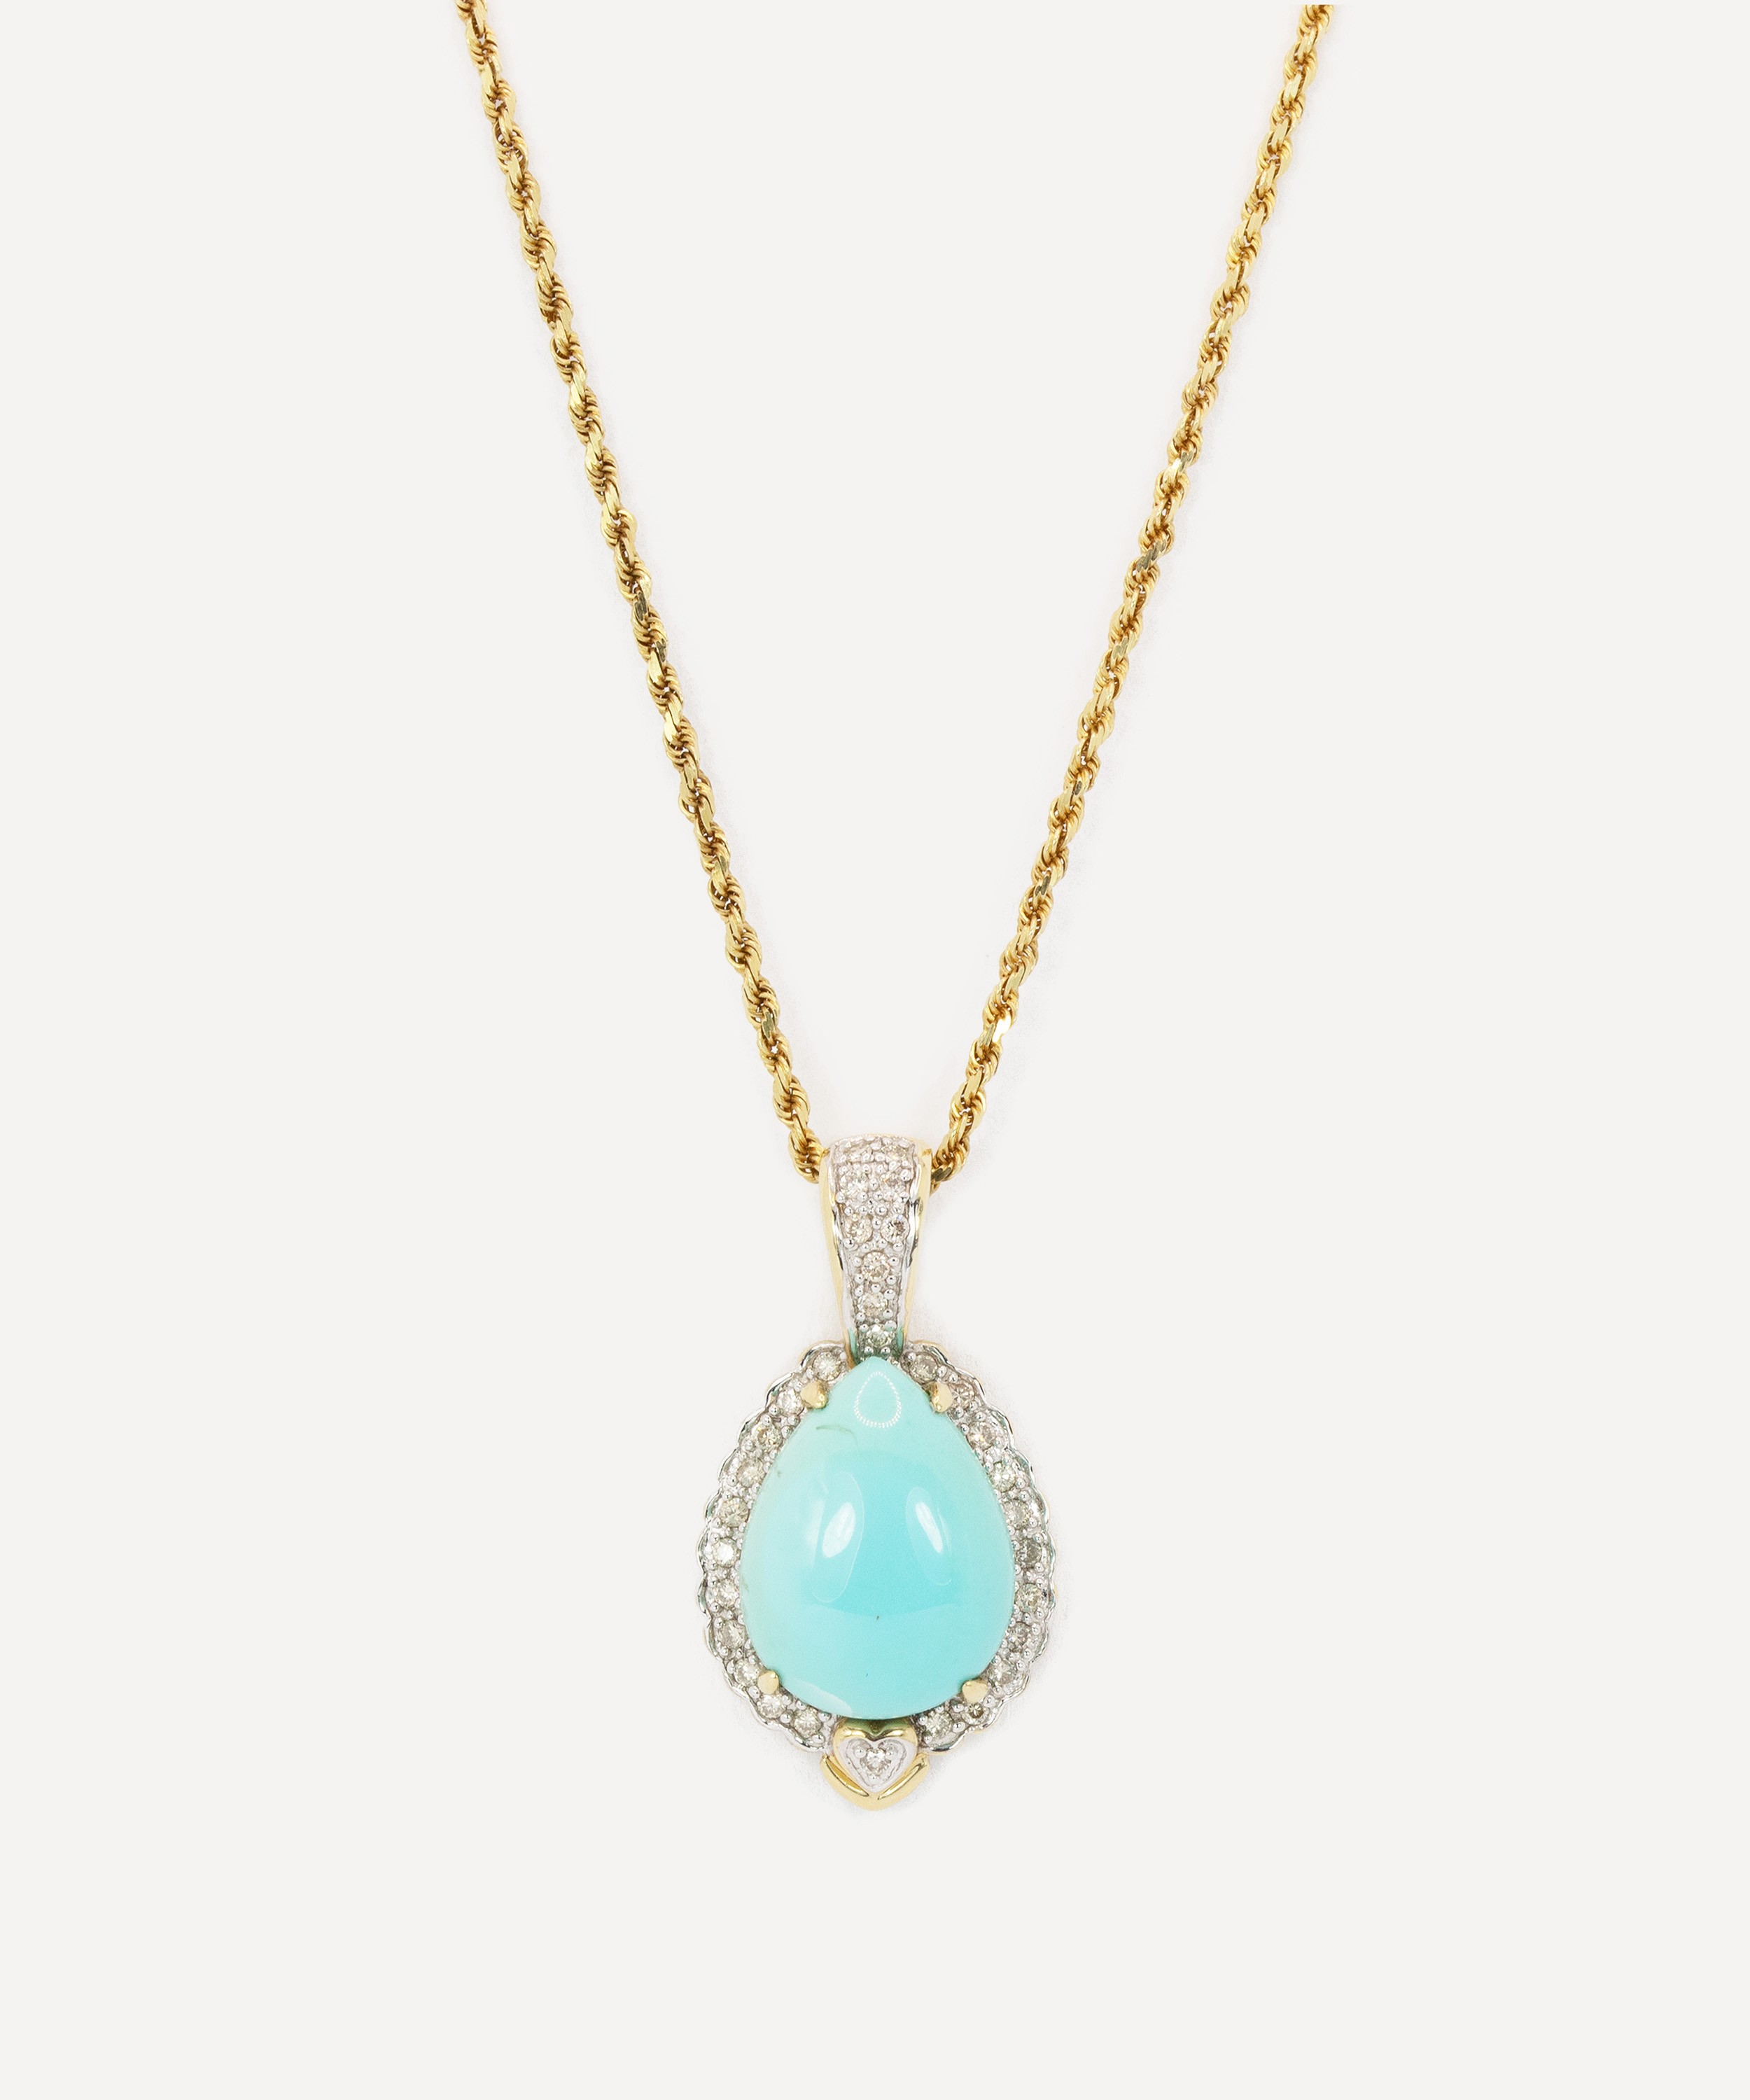 Kojis - 14ct Gold Le Vian Turquoise and Diamond Pendant Necklace